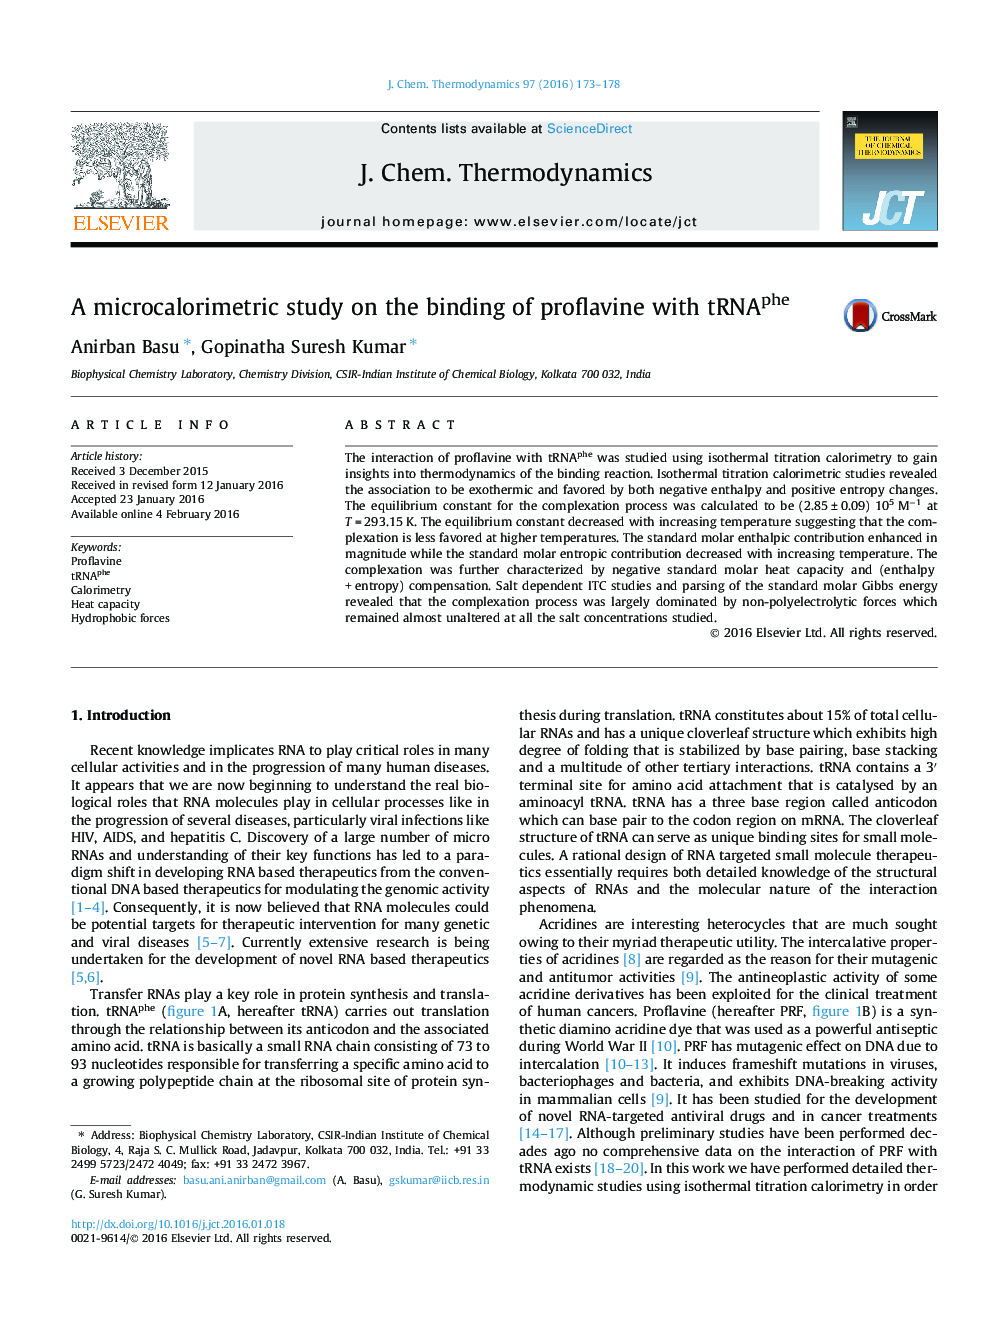 A microcalorimetric study on the binding of proflavine with tRNAphe